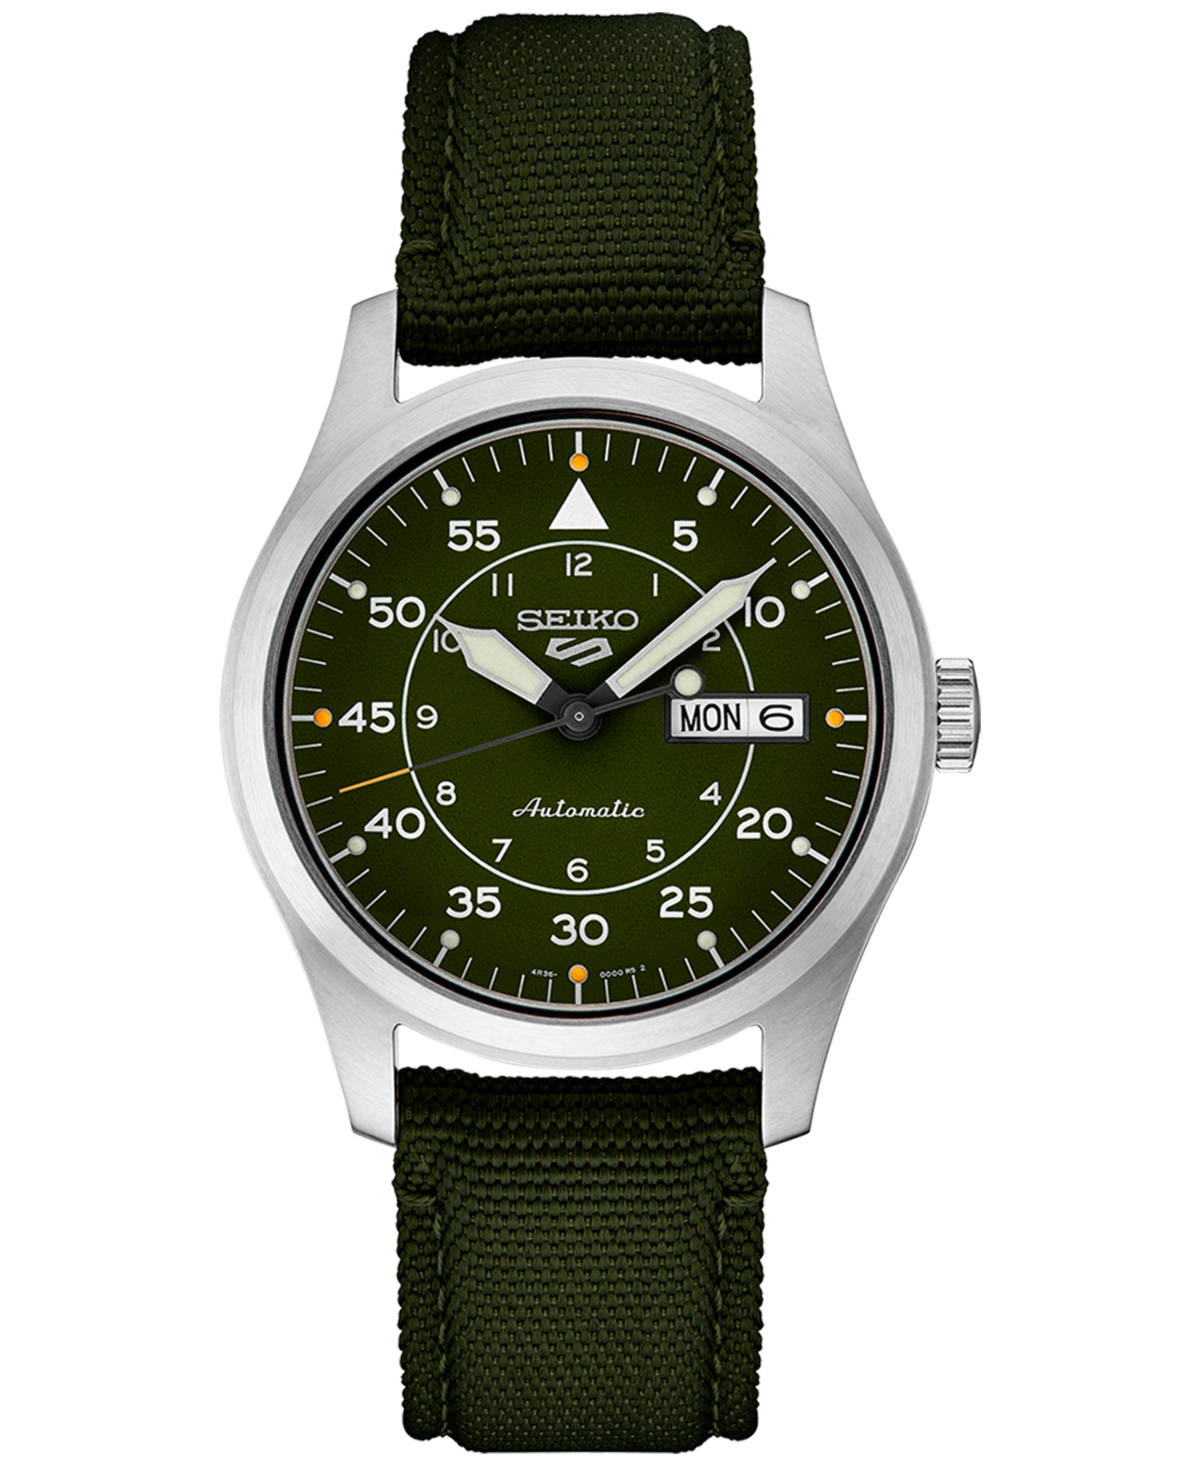 Men's Automatic 5 Sports Green Nylon Strap Watch 39mm - Green